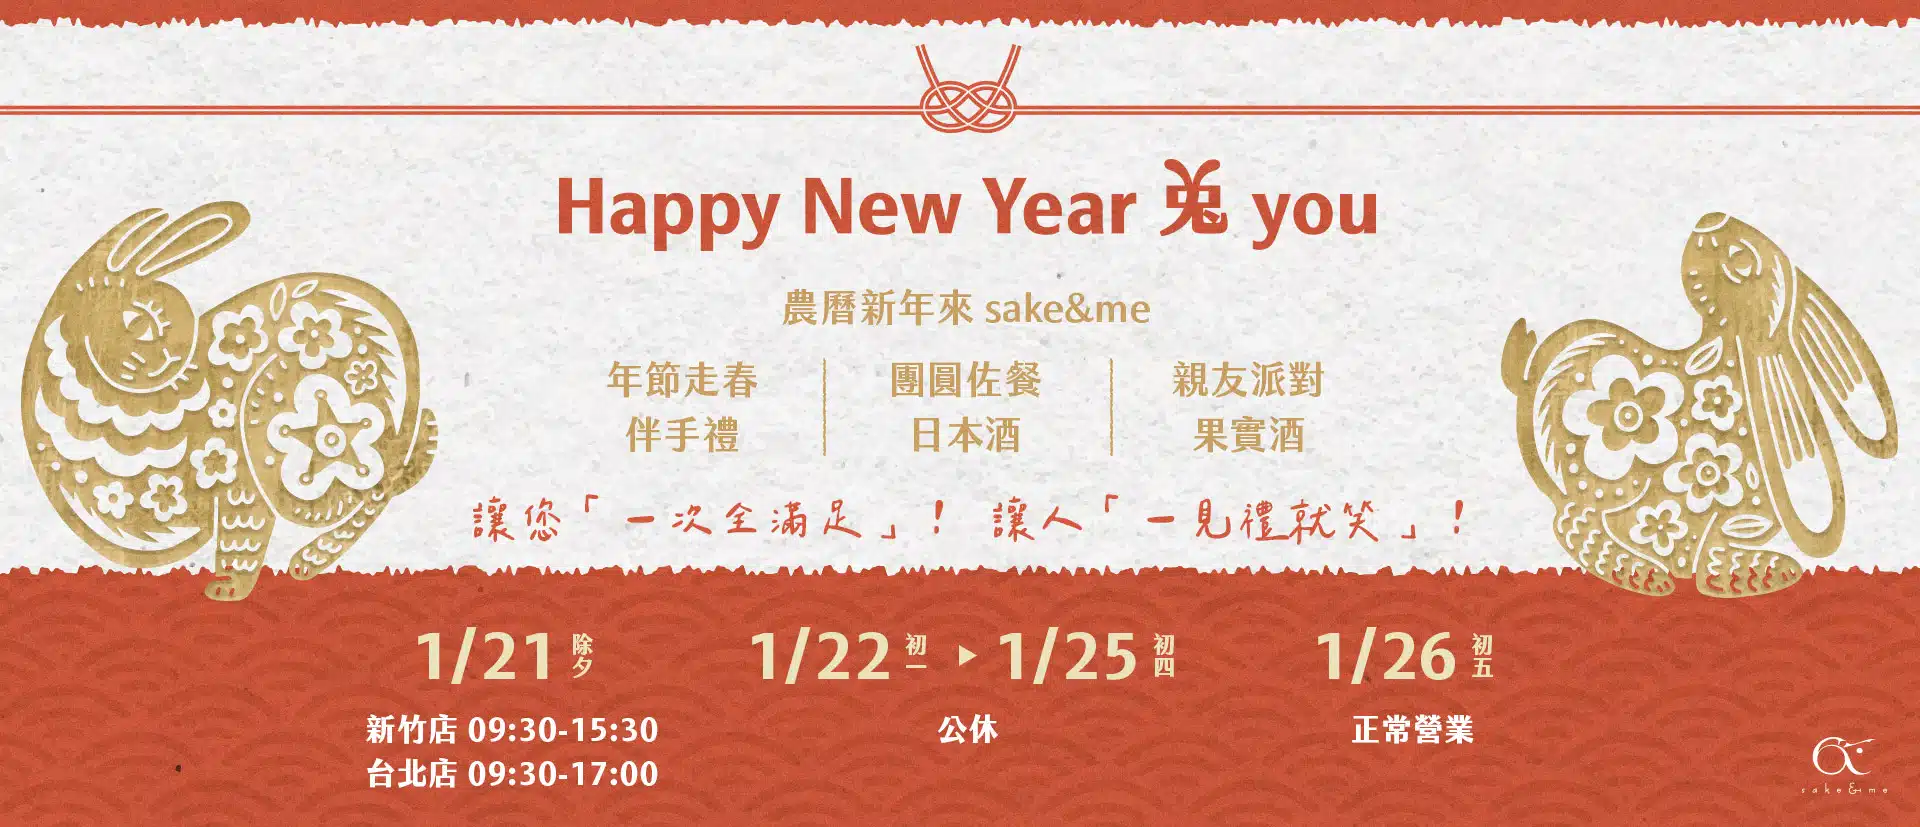 23-0104-Happy-New-Year-兔-you-官網